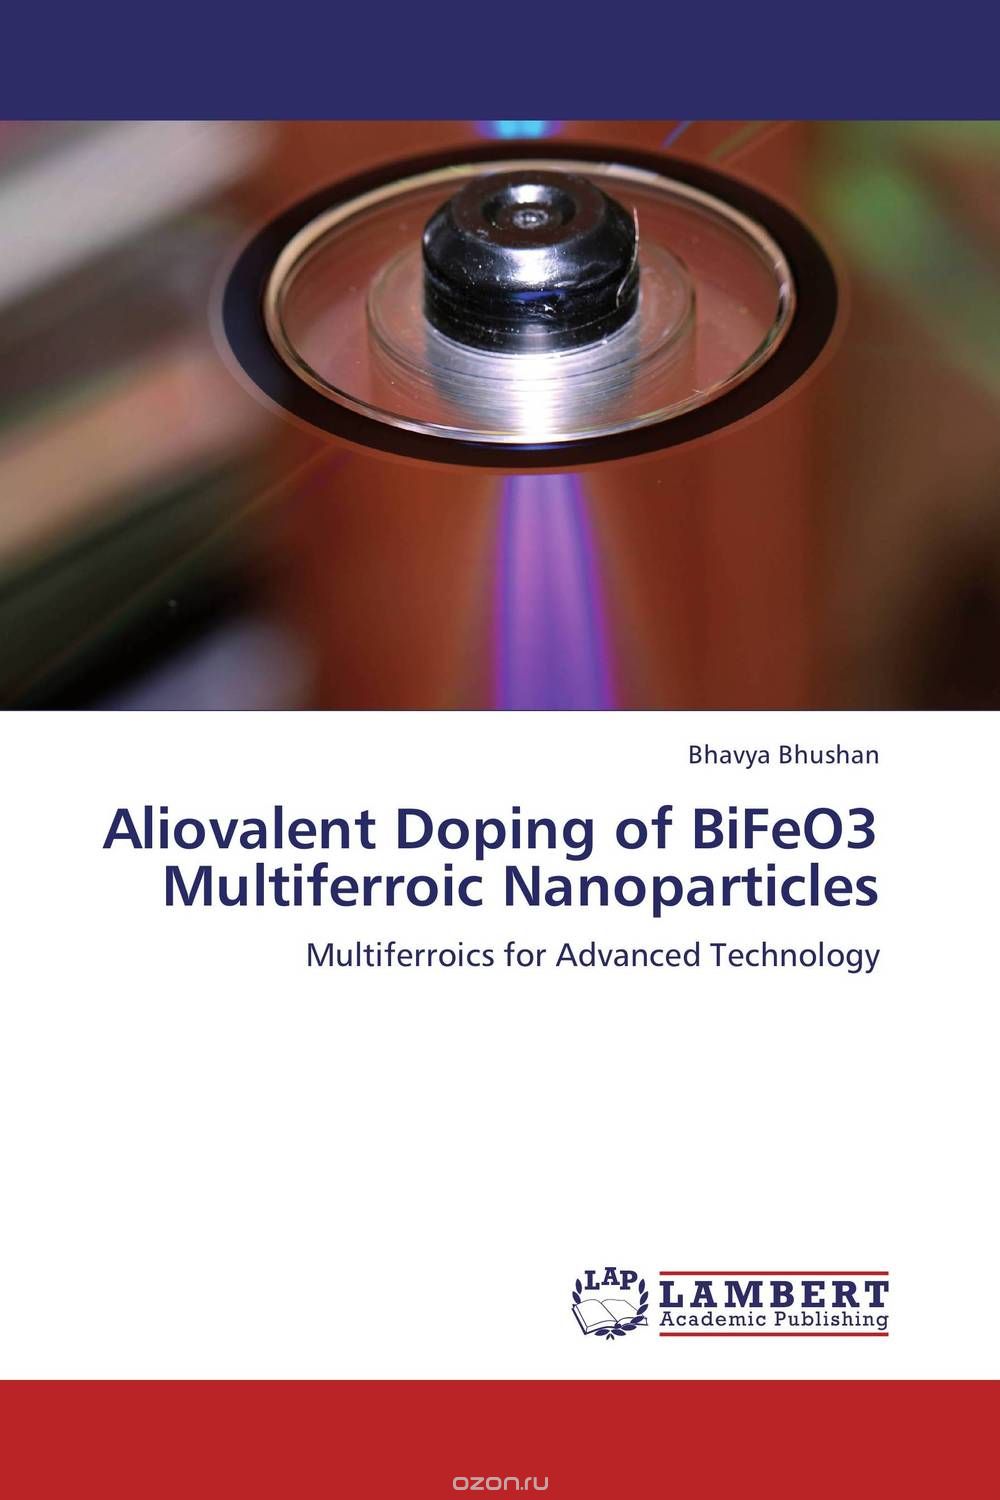 Скачать книгу "Aliovalent Doping of BiFeO3 Multiferroic Nanoparticles"